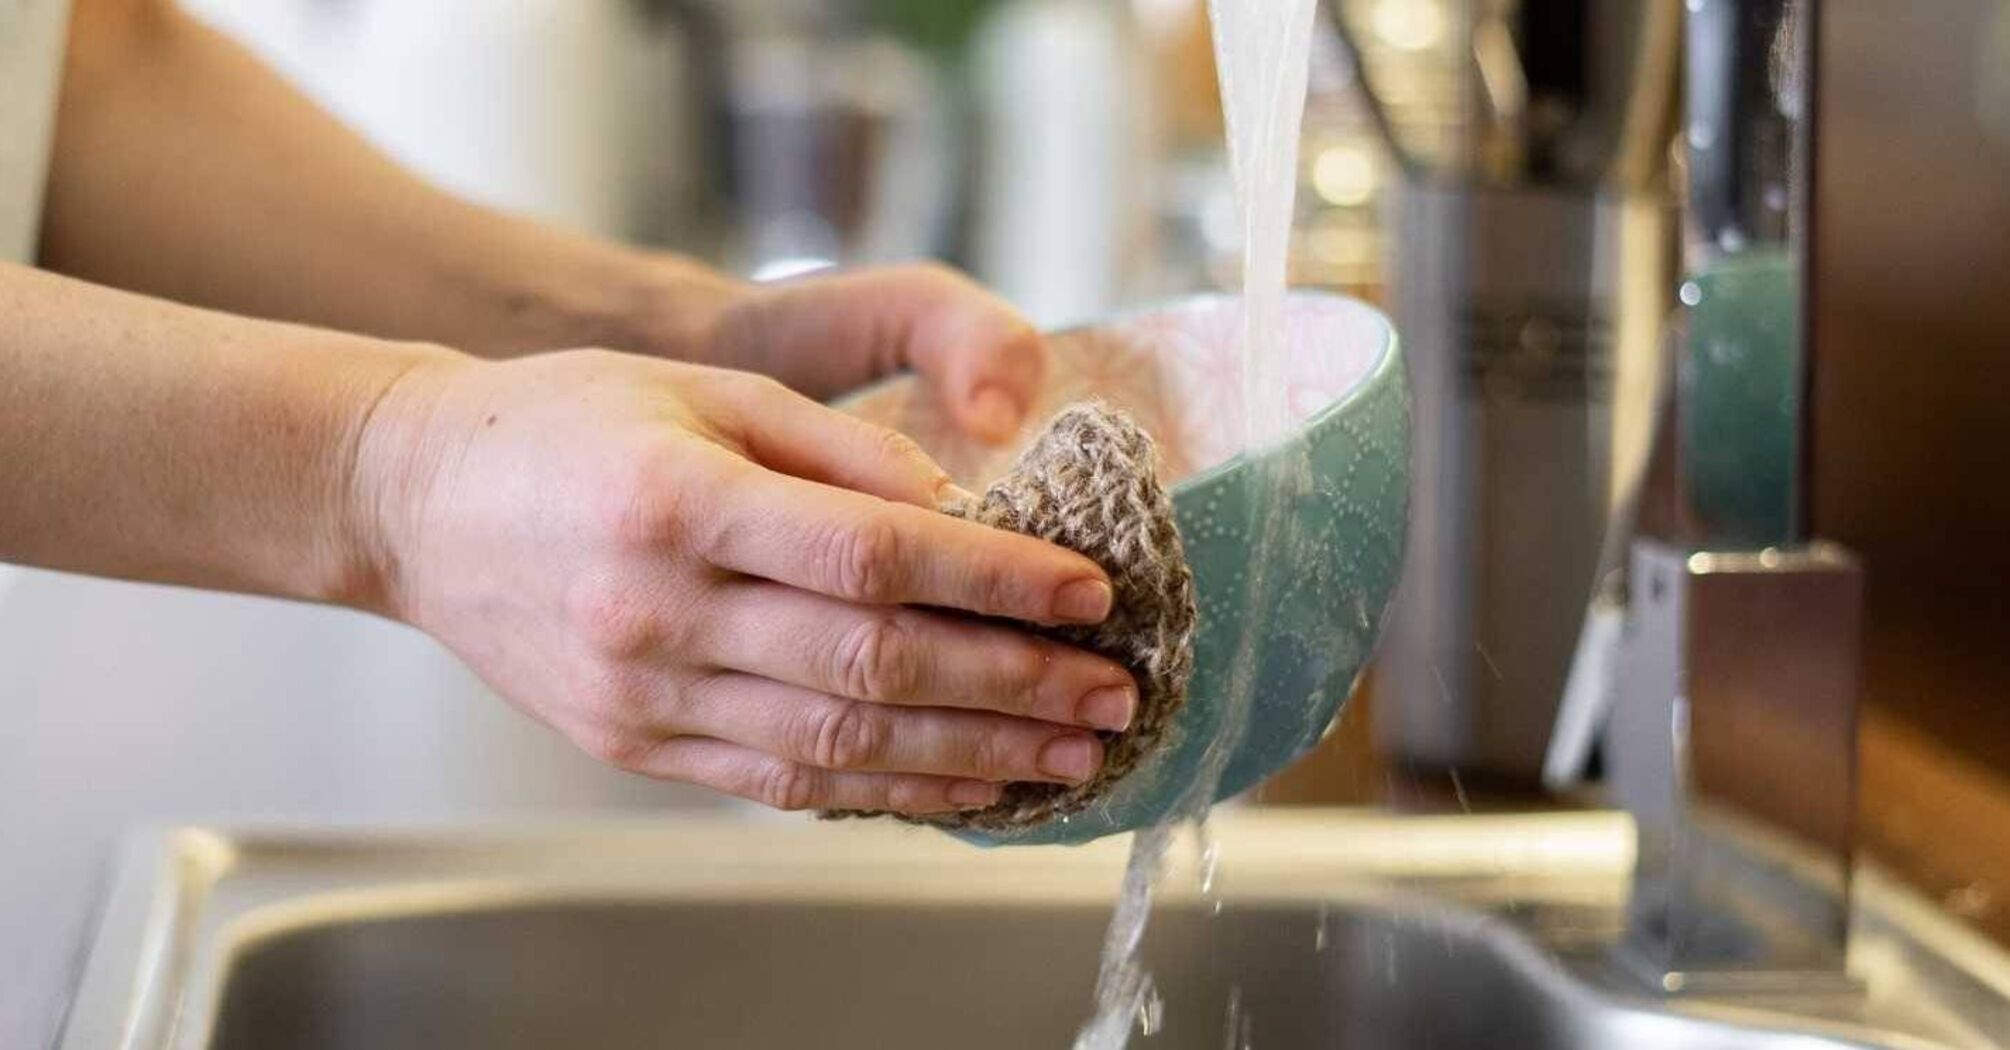 How to make an eco-friendly dishwashing sponge